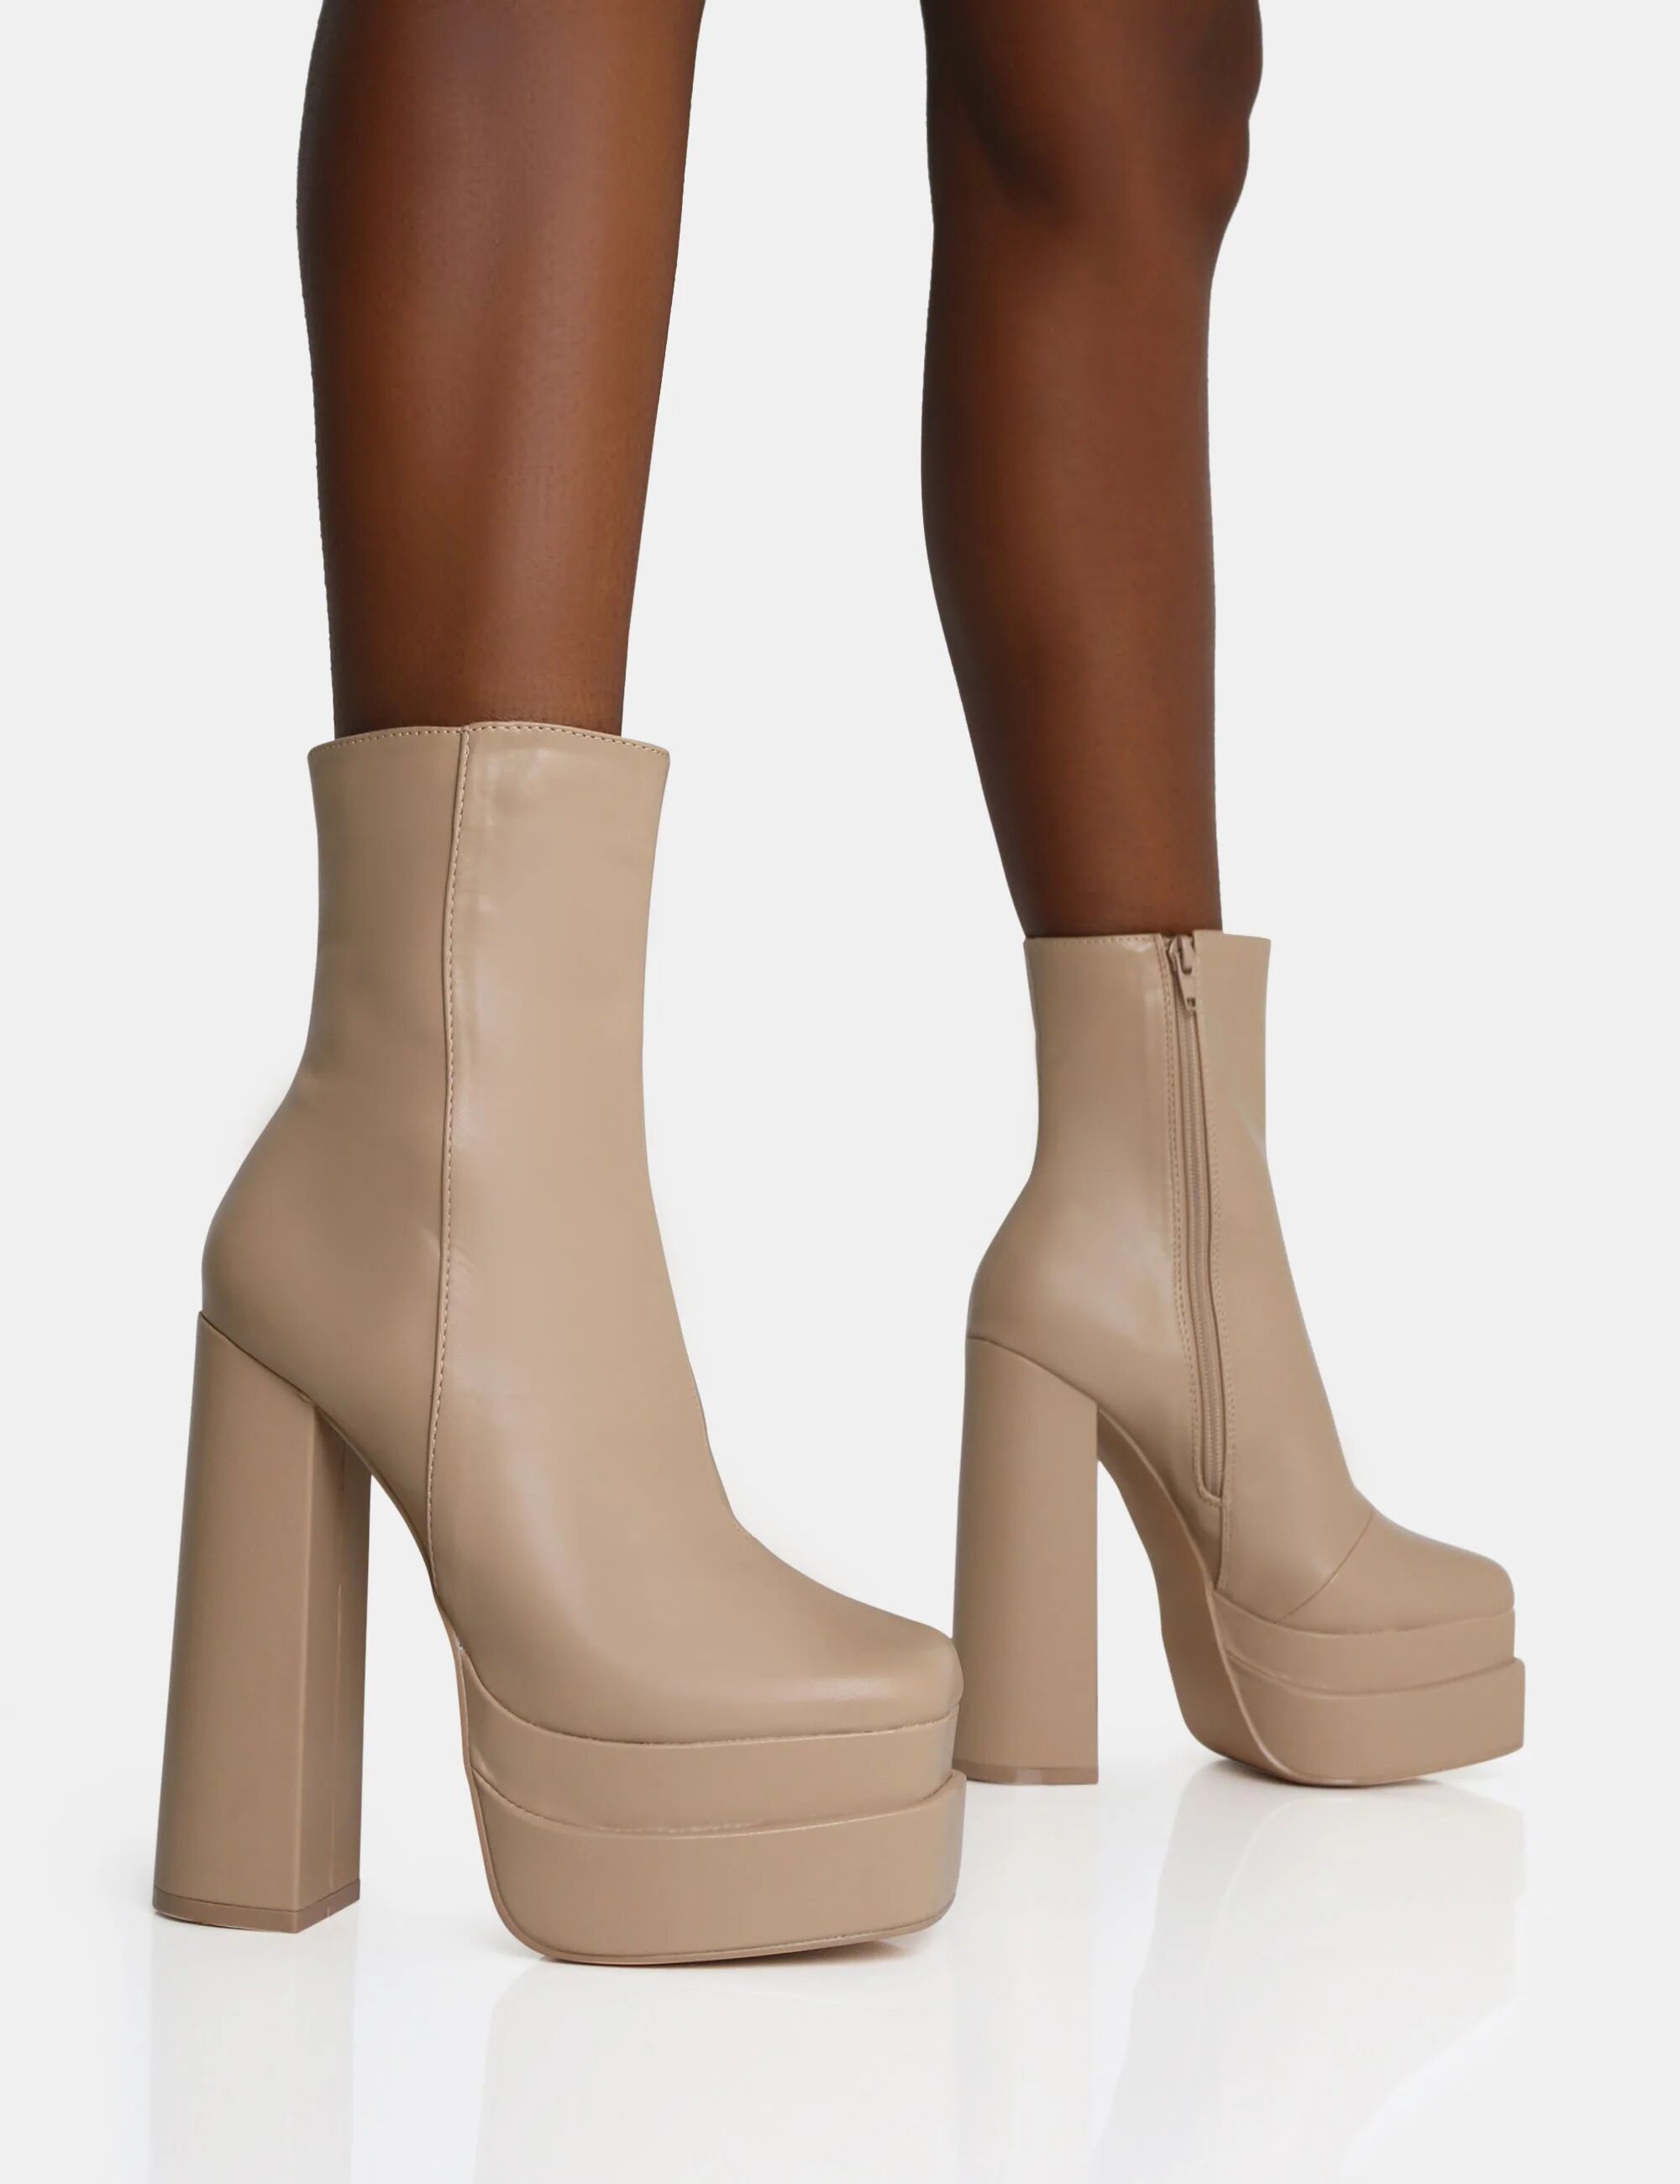 Public Desire US Supine Nude PU Chunky Heeled Platform Ankle Boots - female - US 10 / UK 8 / EU 41 - Size: 7871371346051